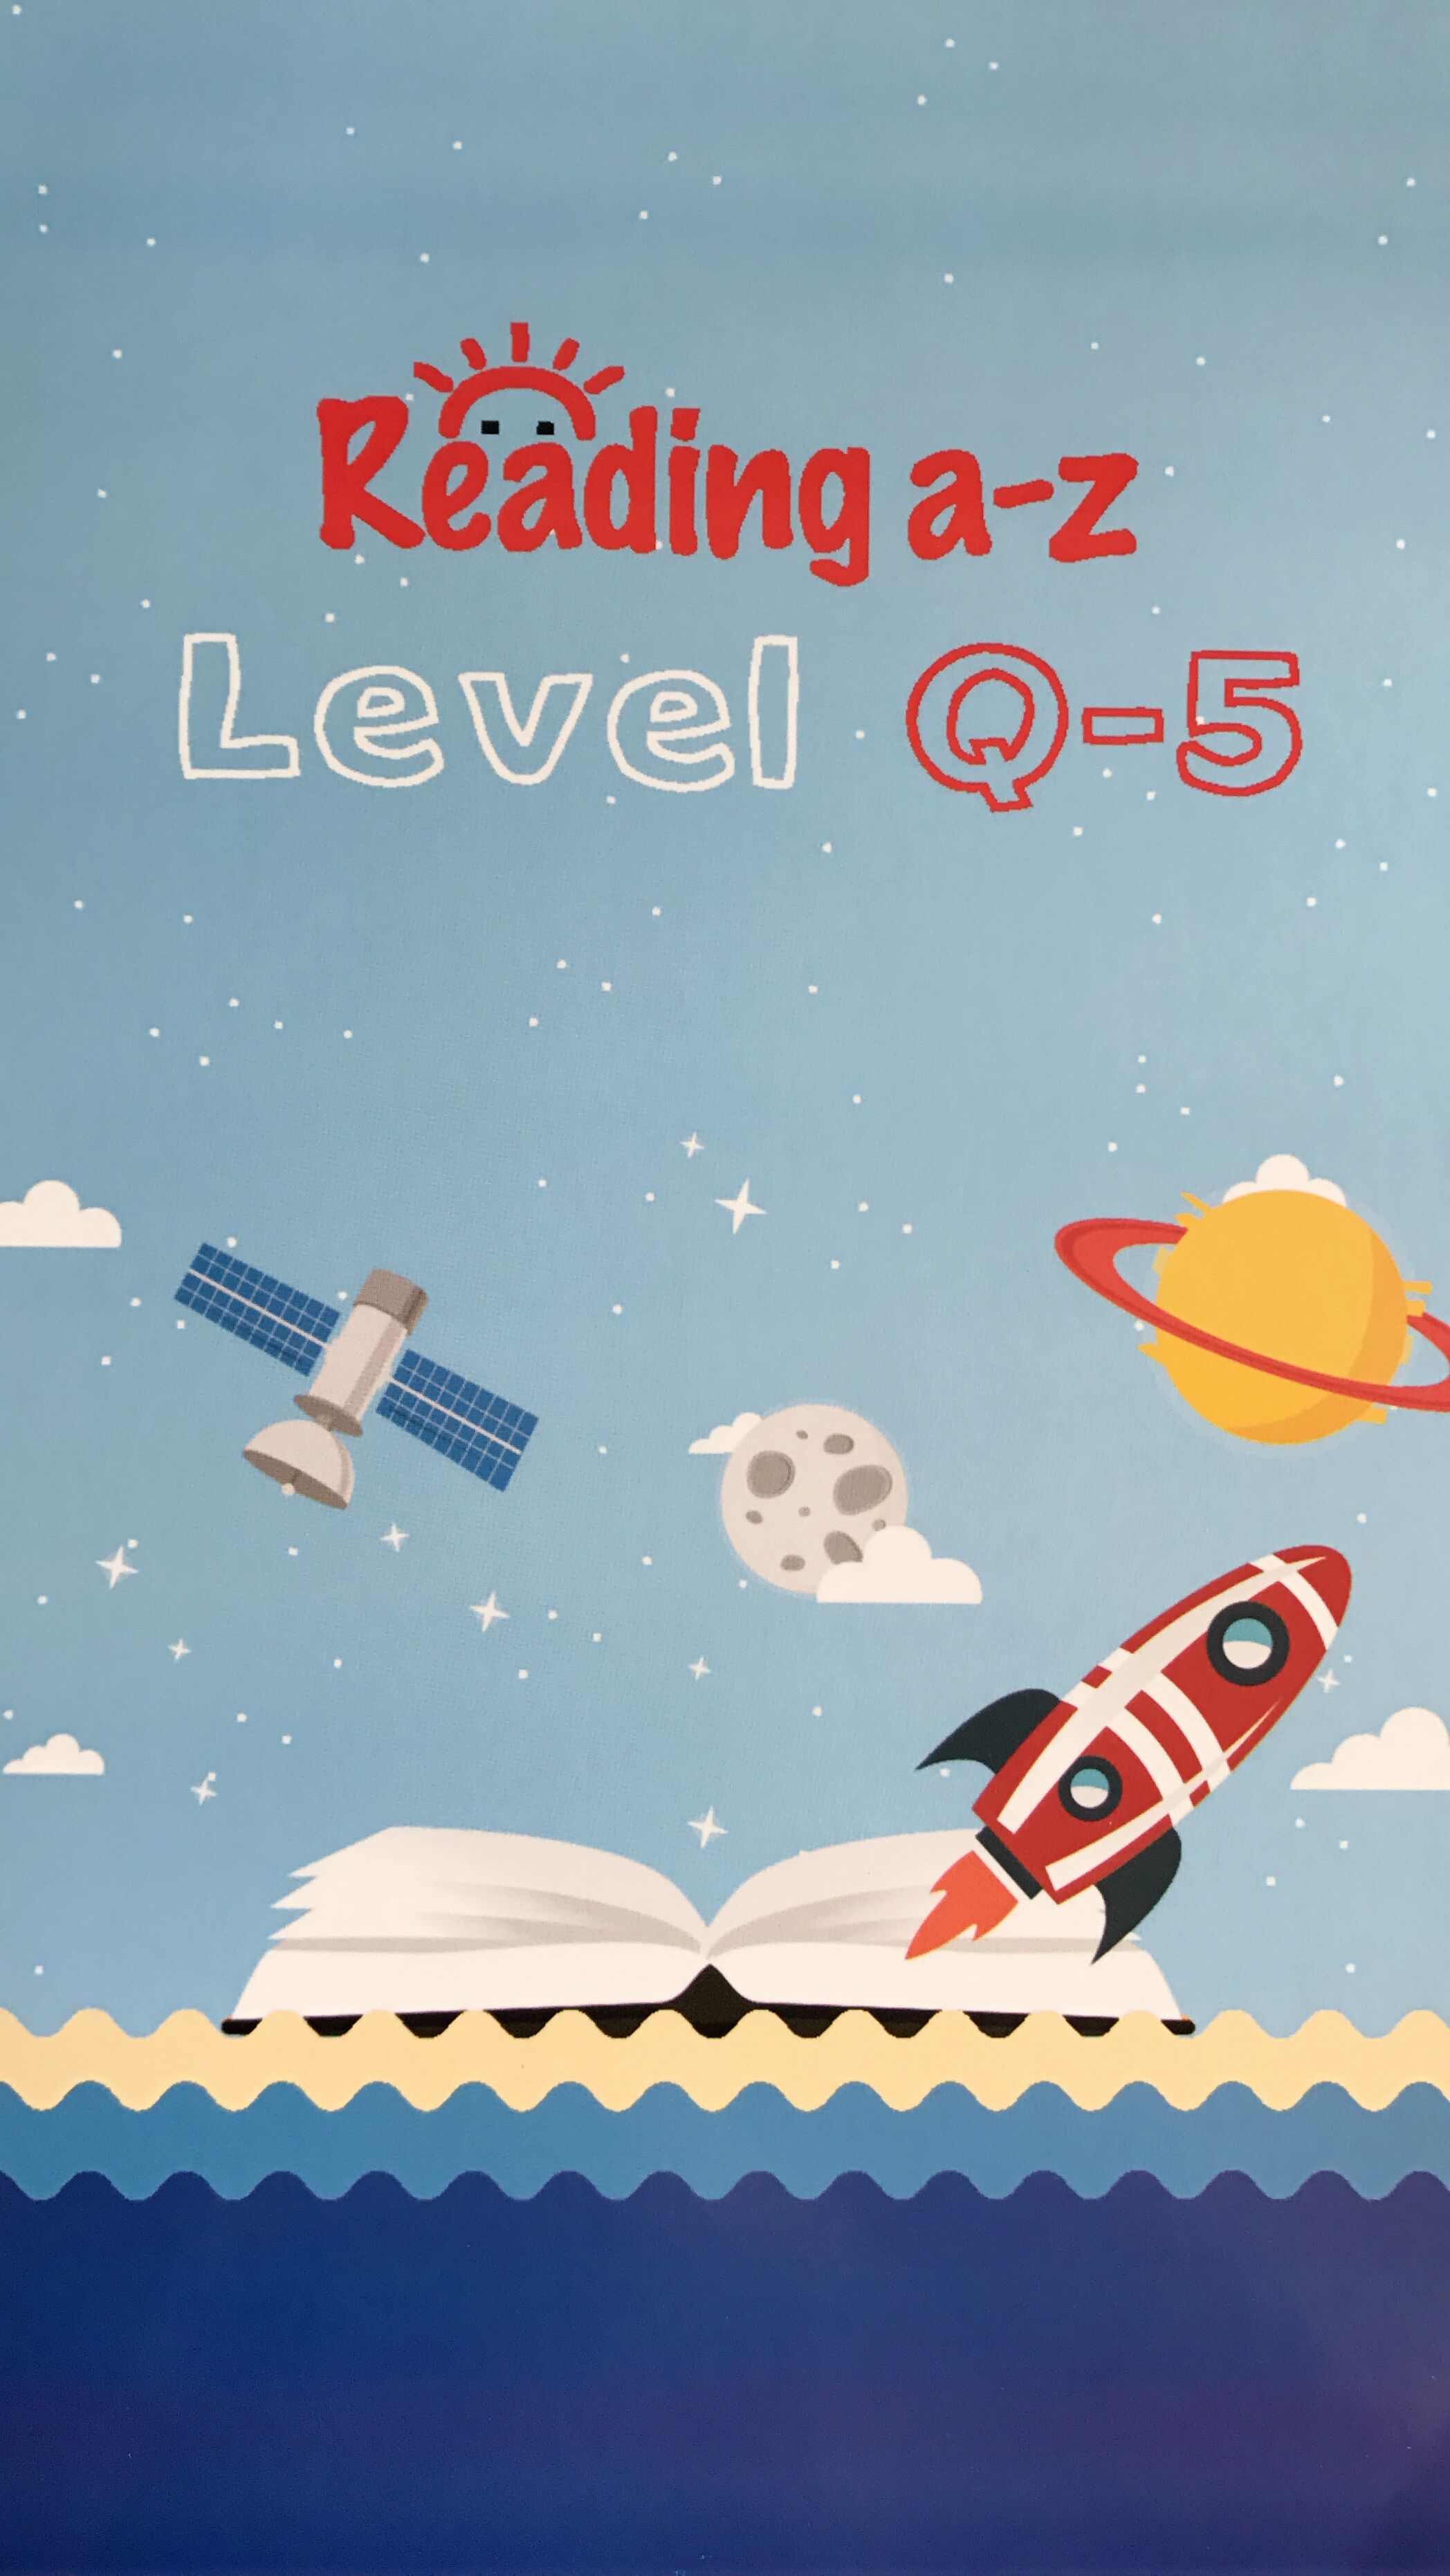 Reading A-Z Level Q-5